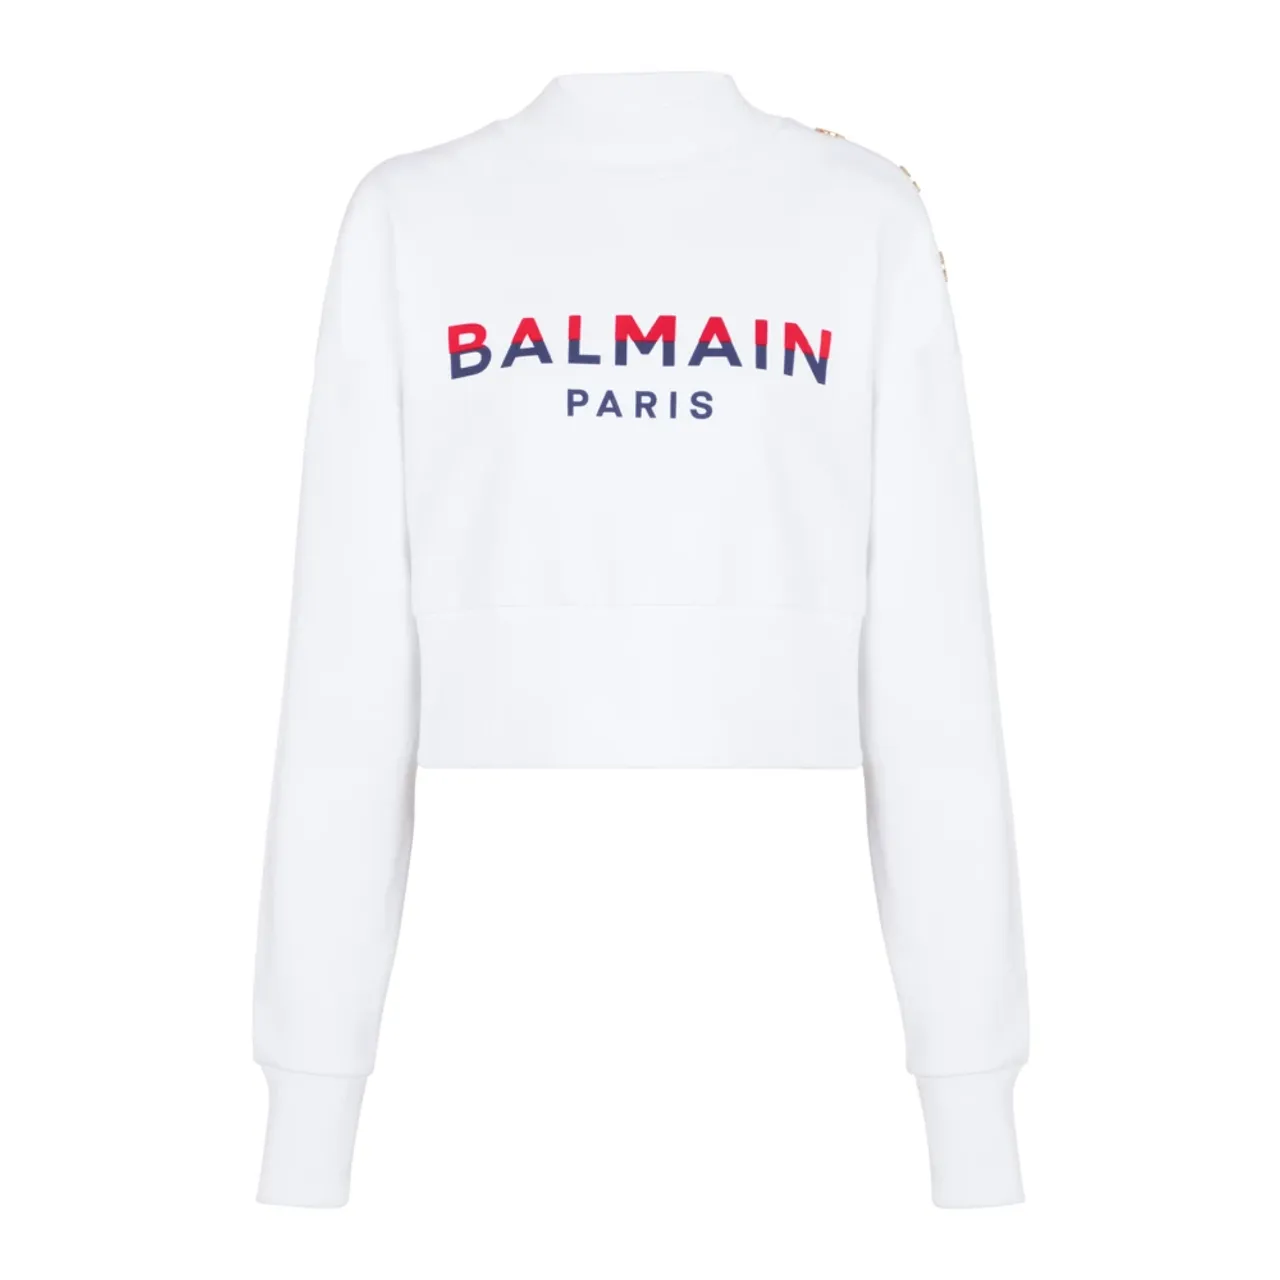 Kurzes Sweatshirt mit beflocktem Paris Print Balmain